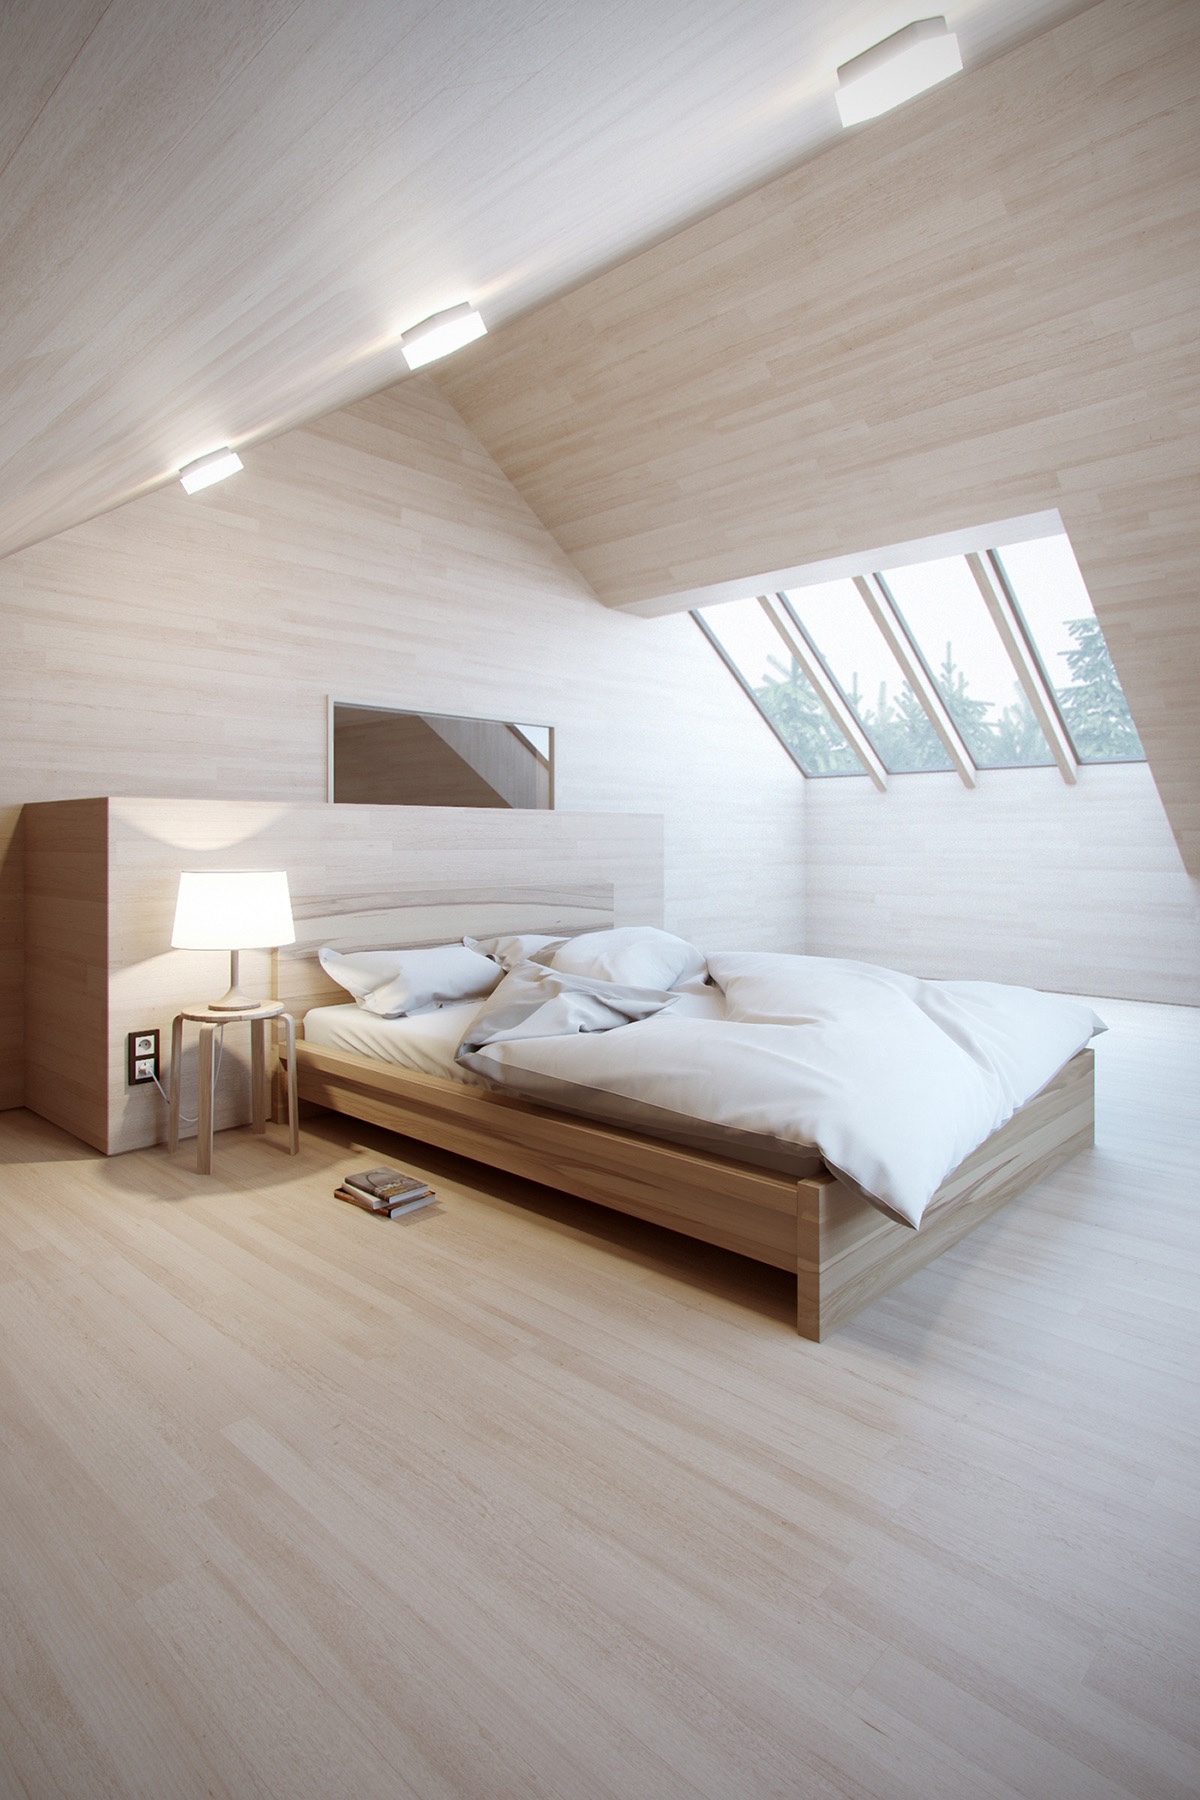 Minimalist Wooden Attic Bedroom